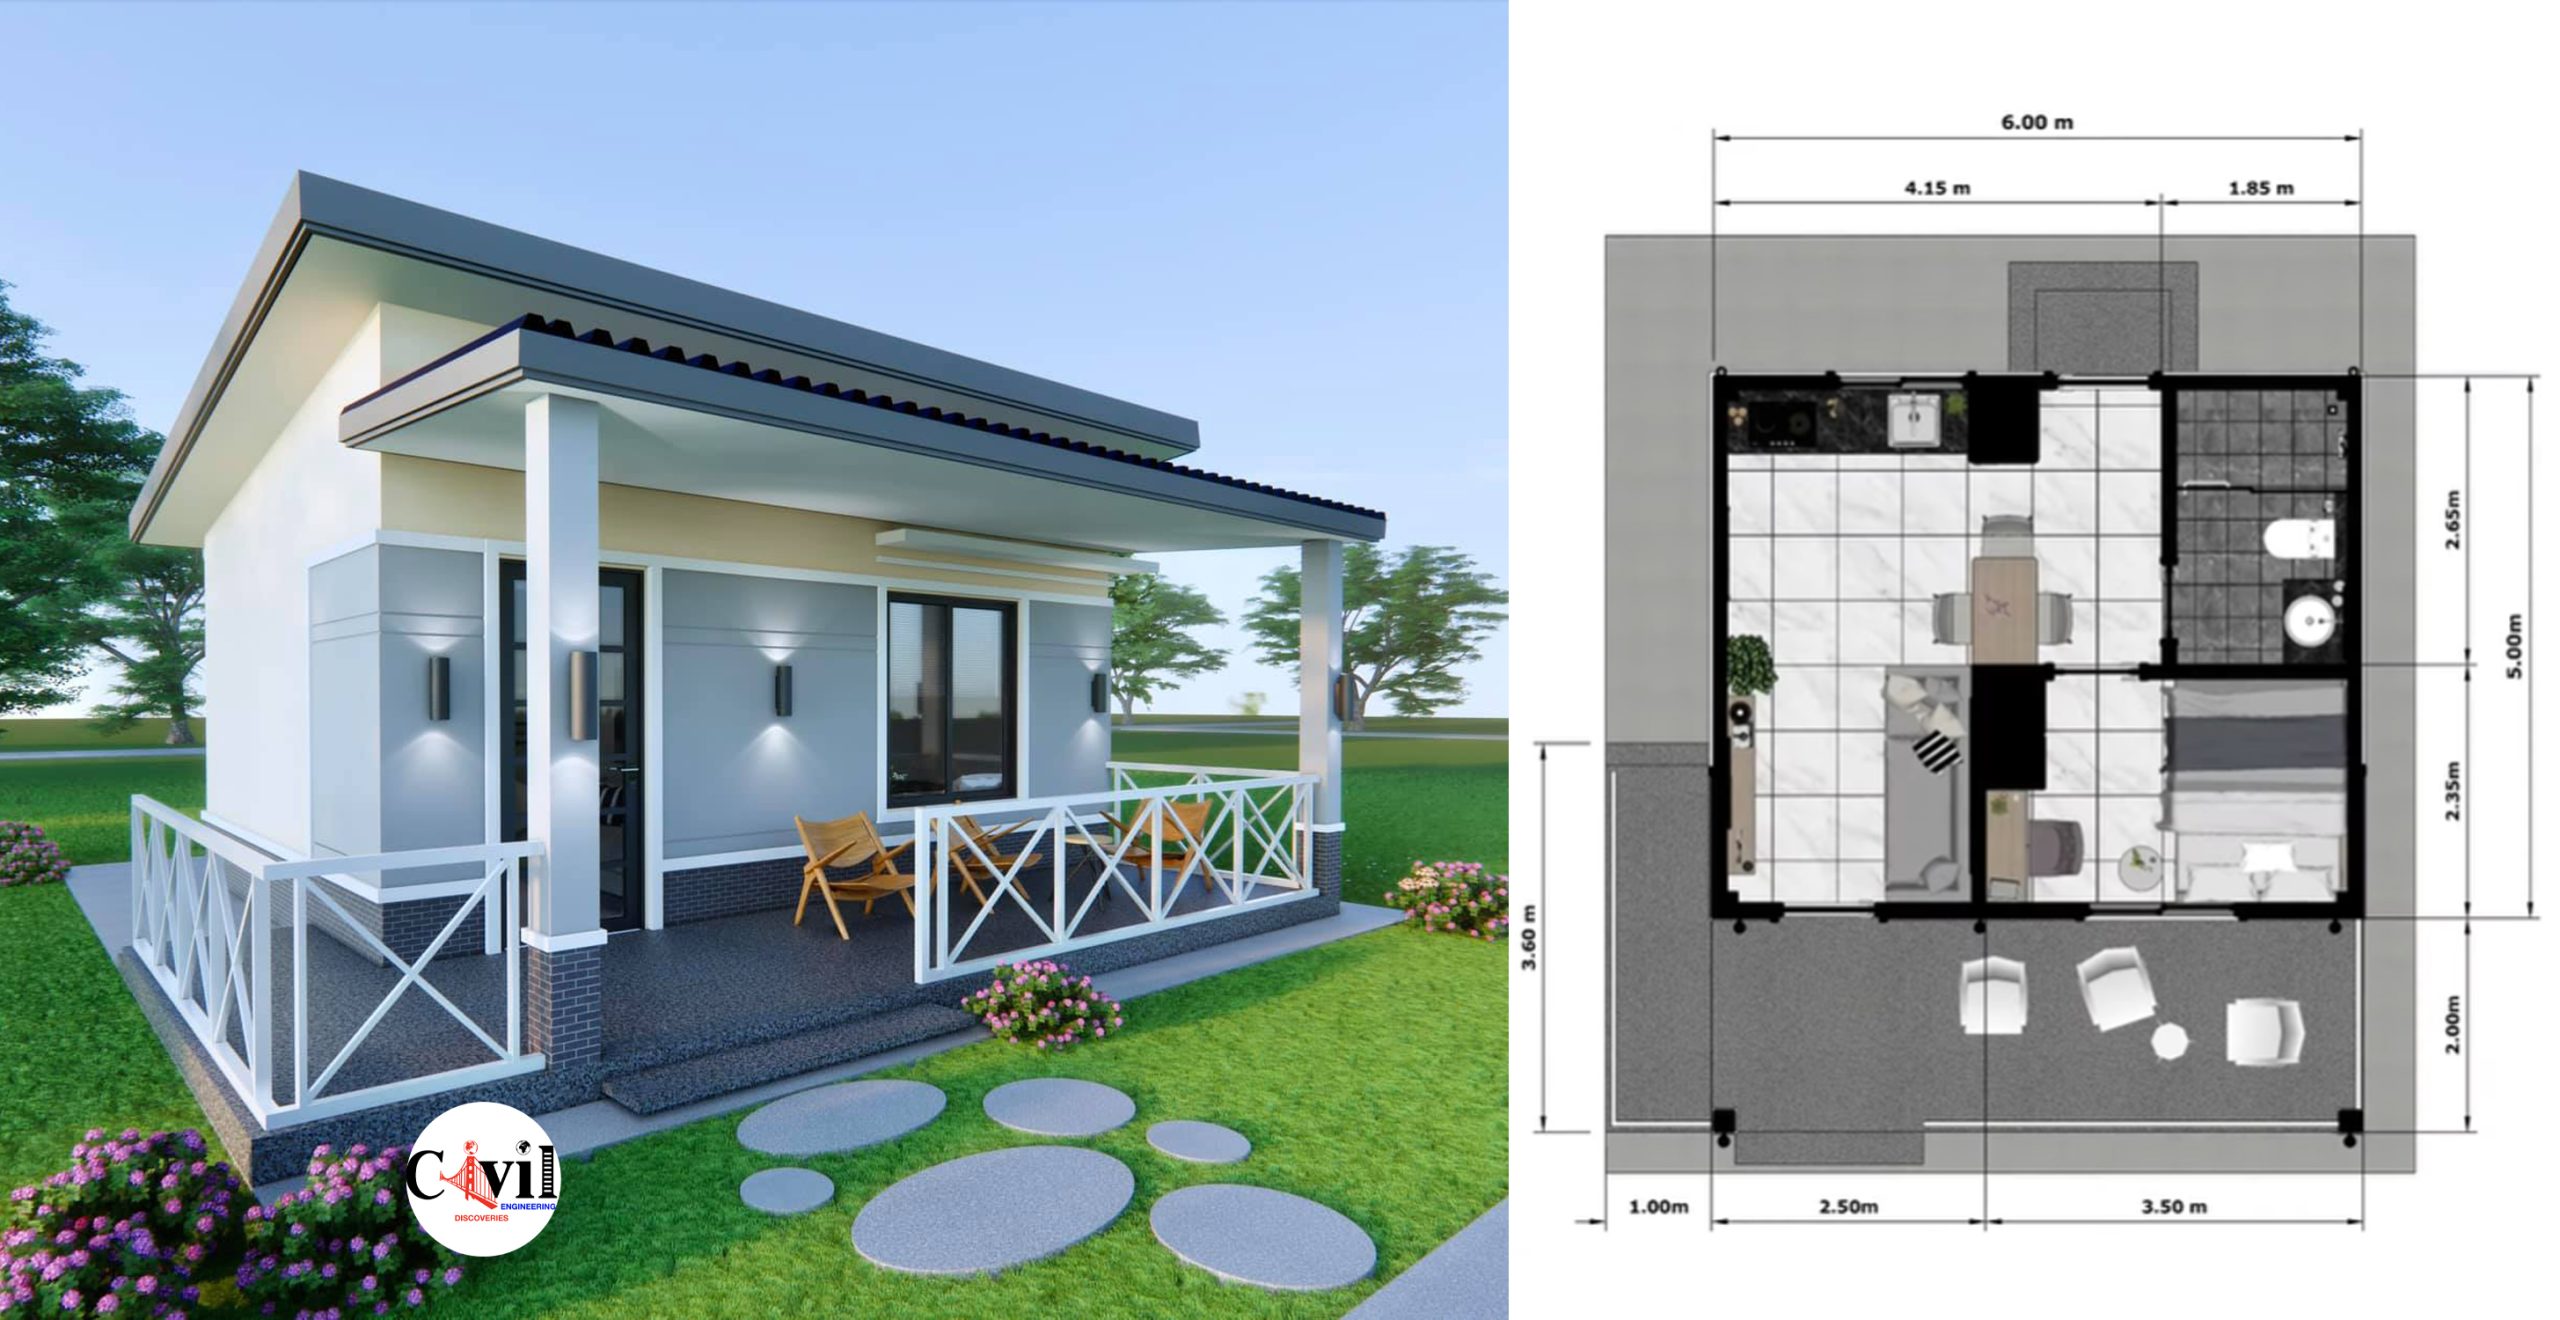 Floor Plan Design With Dimension In Meters | Floor Roma